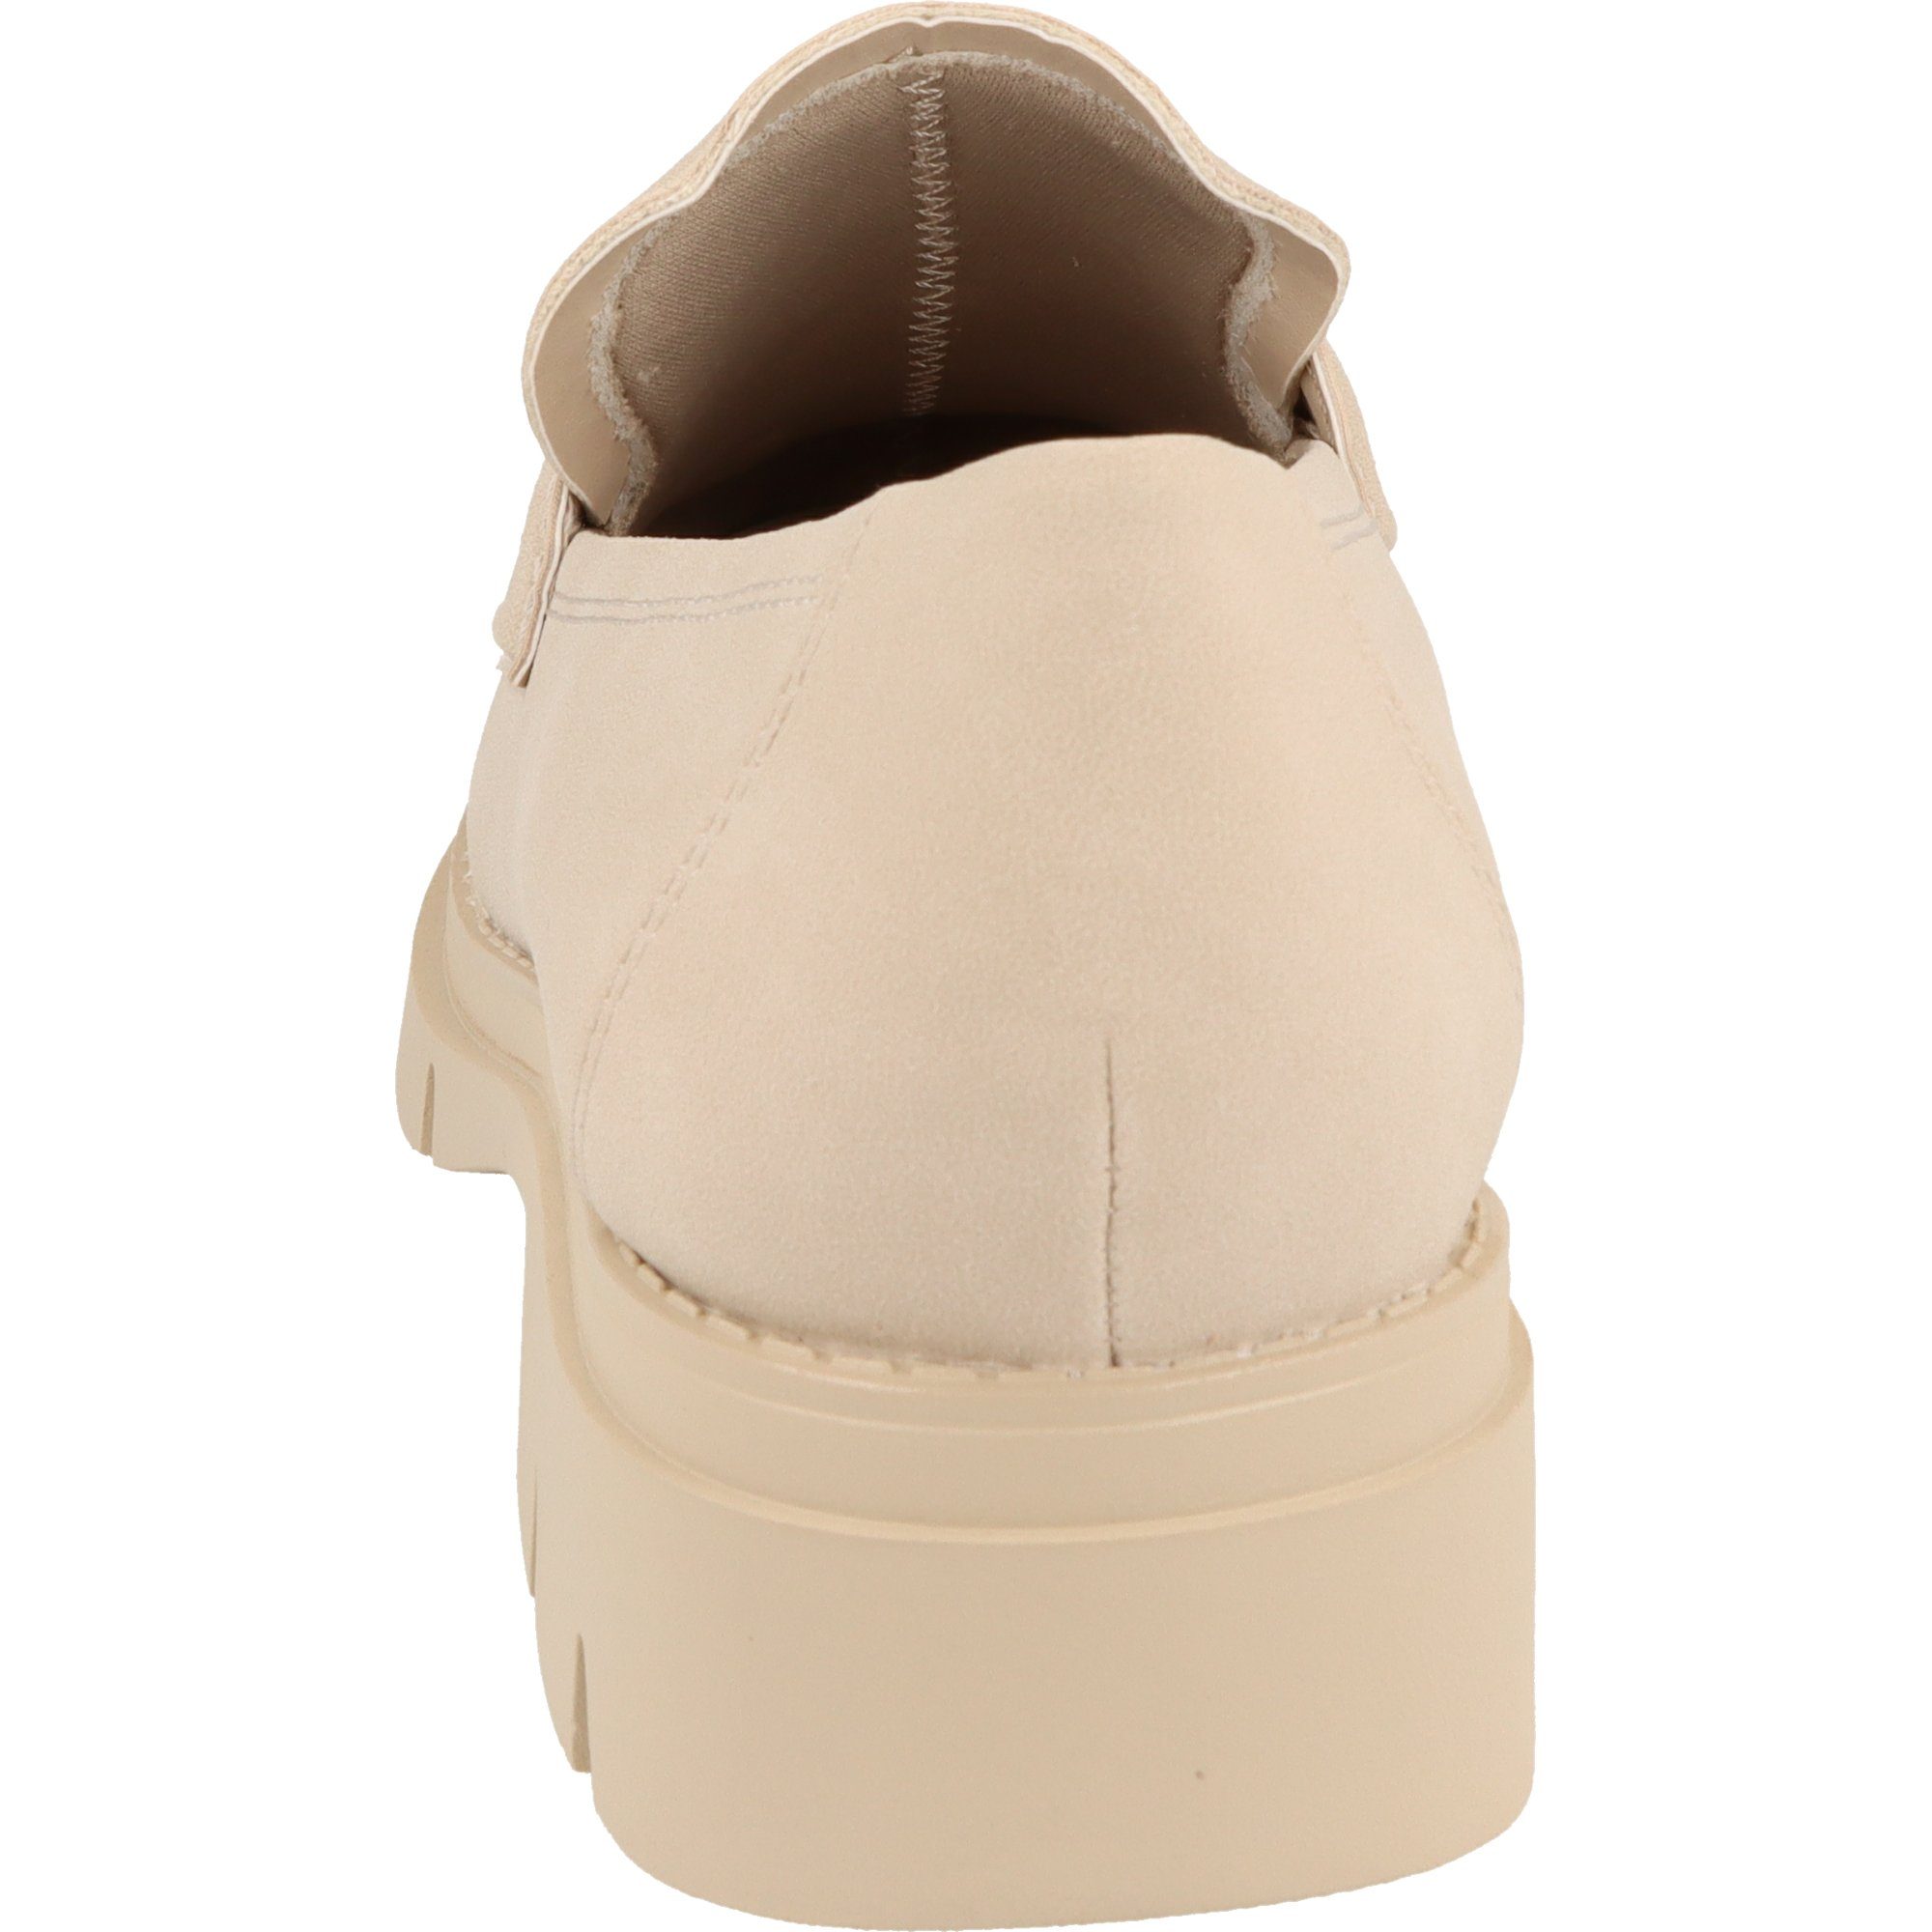 Tamaris Damen Schuhe Komfort Loafer 1-24313-41 Shell Halbschuhe Vegan Slipper